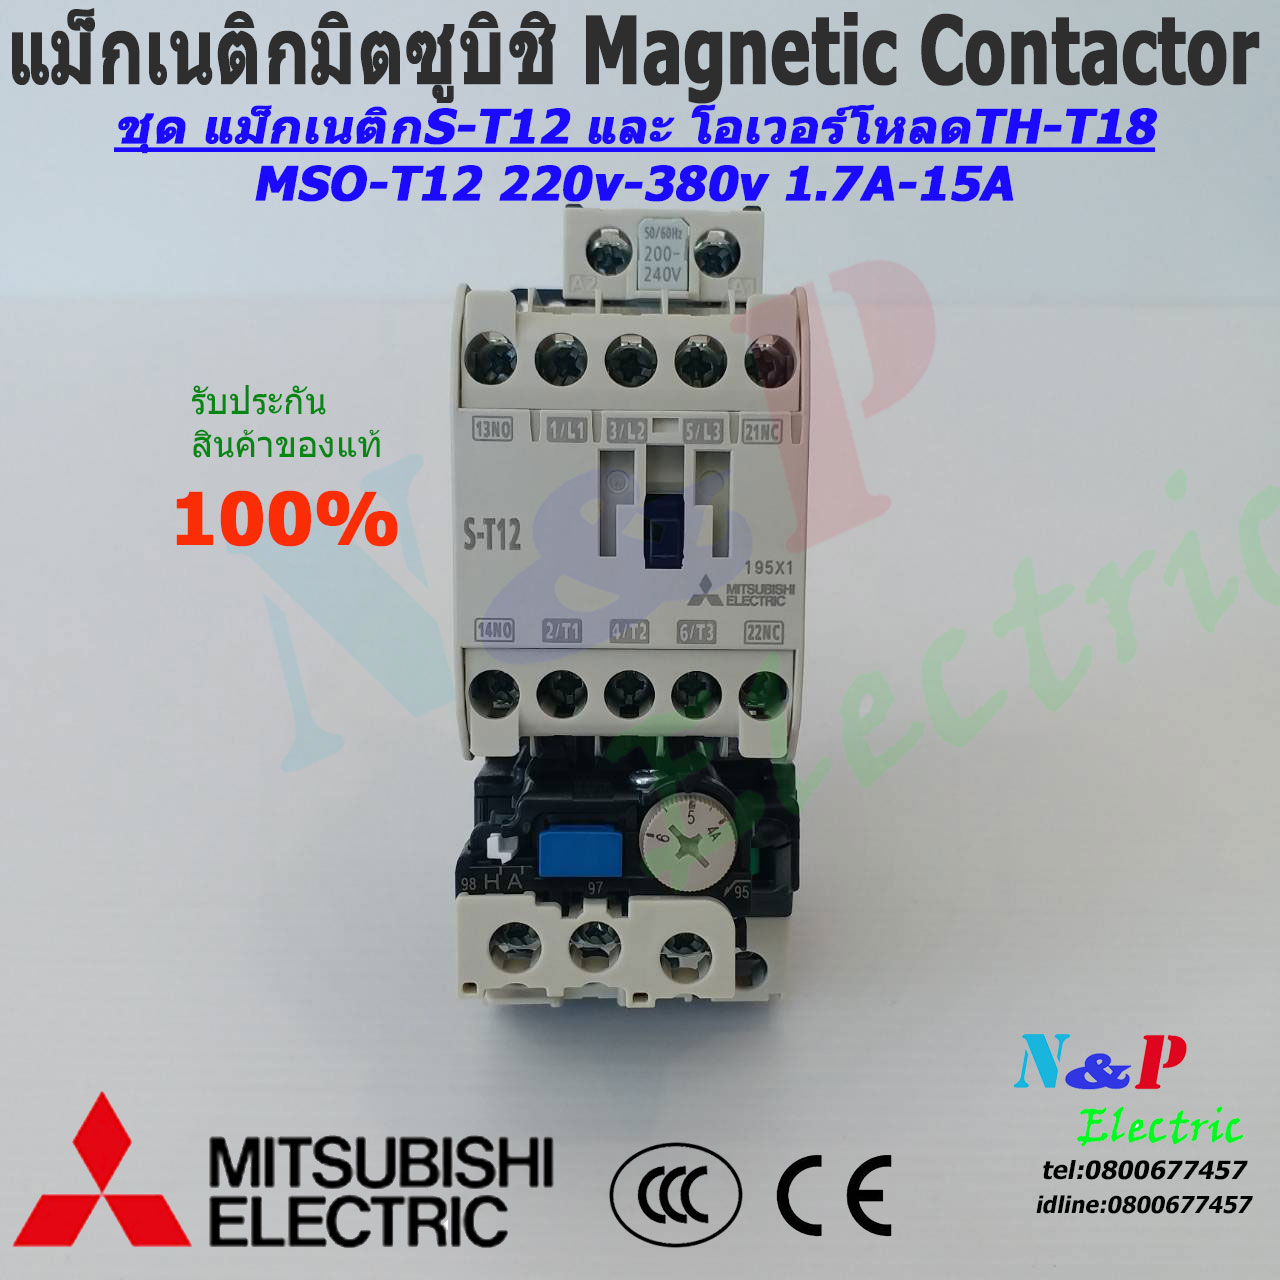 MITSUBISHI MSO-T12 220V-380V1.7A-18A ชุดแม็กเนติก พร้อมโอเวอร์โหลด มิตซูบิชิ Magnetic Contactor+OVERLOAD RELAY